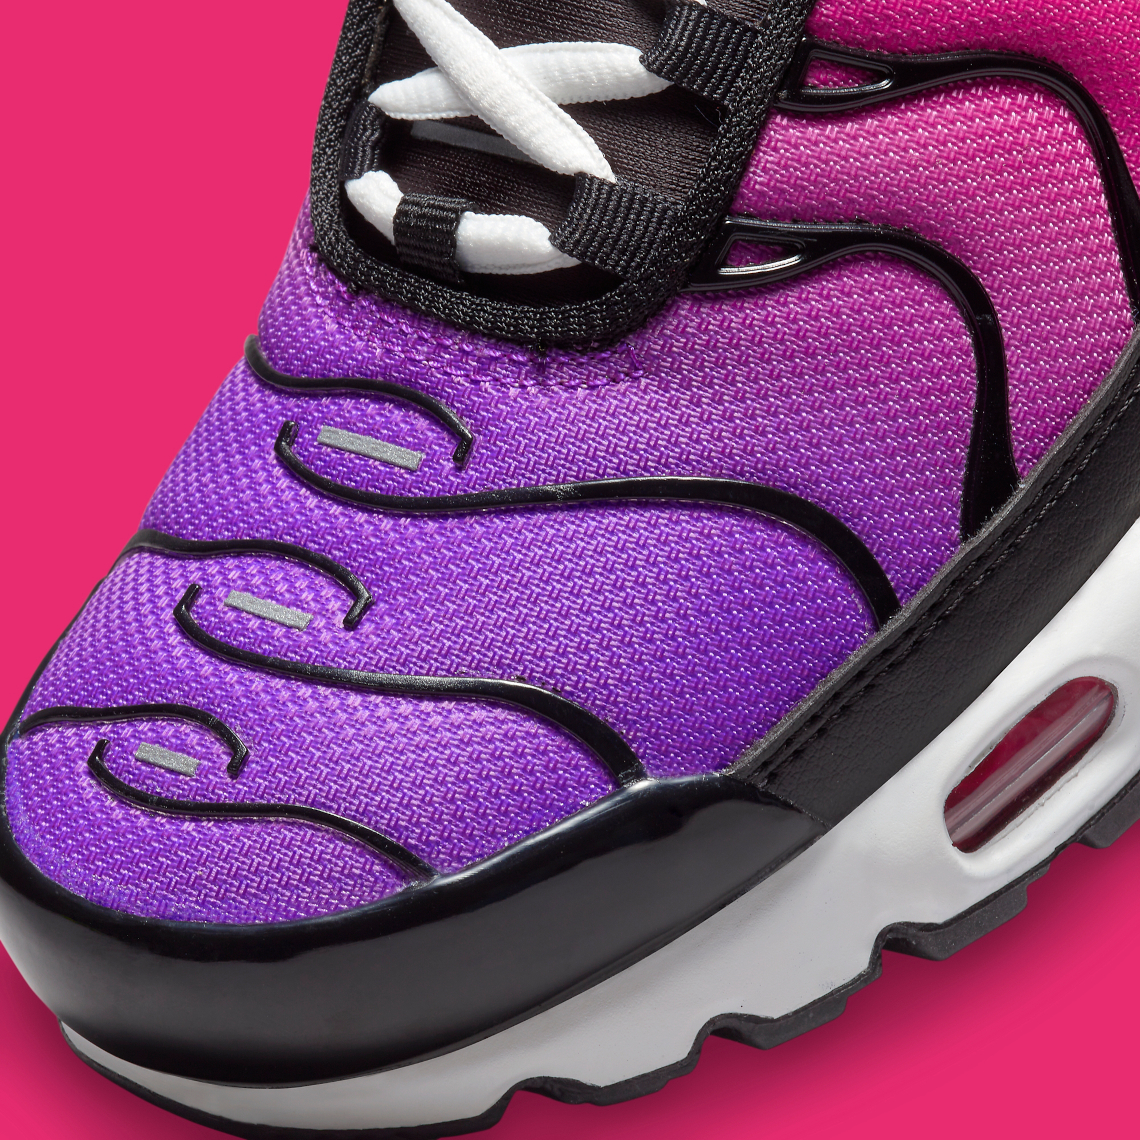 Nike Nike Downshifter 7 Black Pink Marathon Running Shoes Sneakers 852466-008 Dz3670 500 1